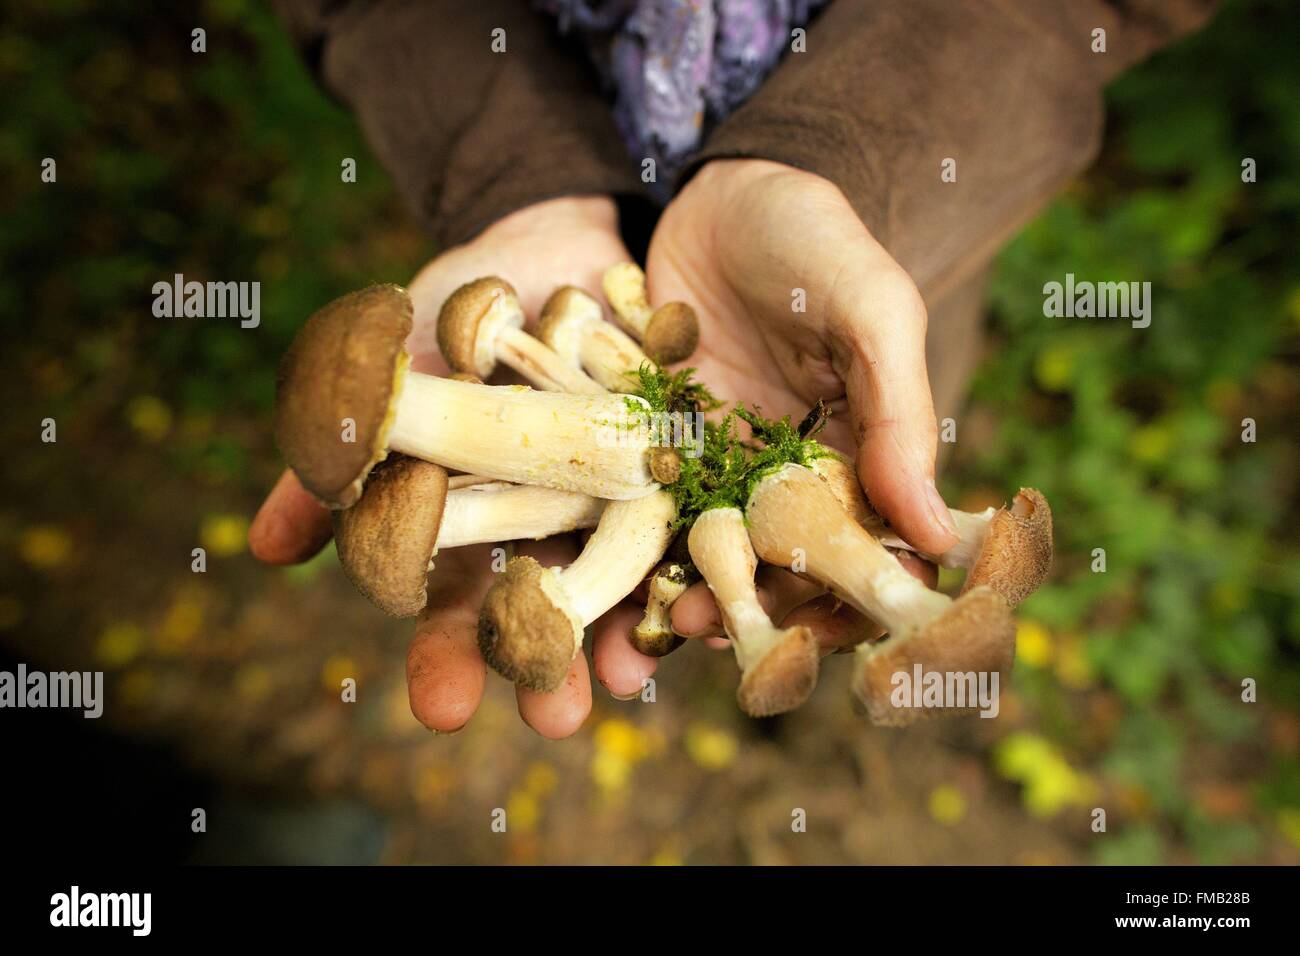 France, Oise, mushroom hunting Stock Photo